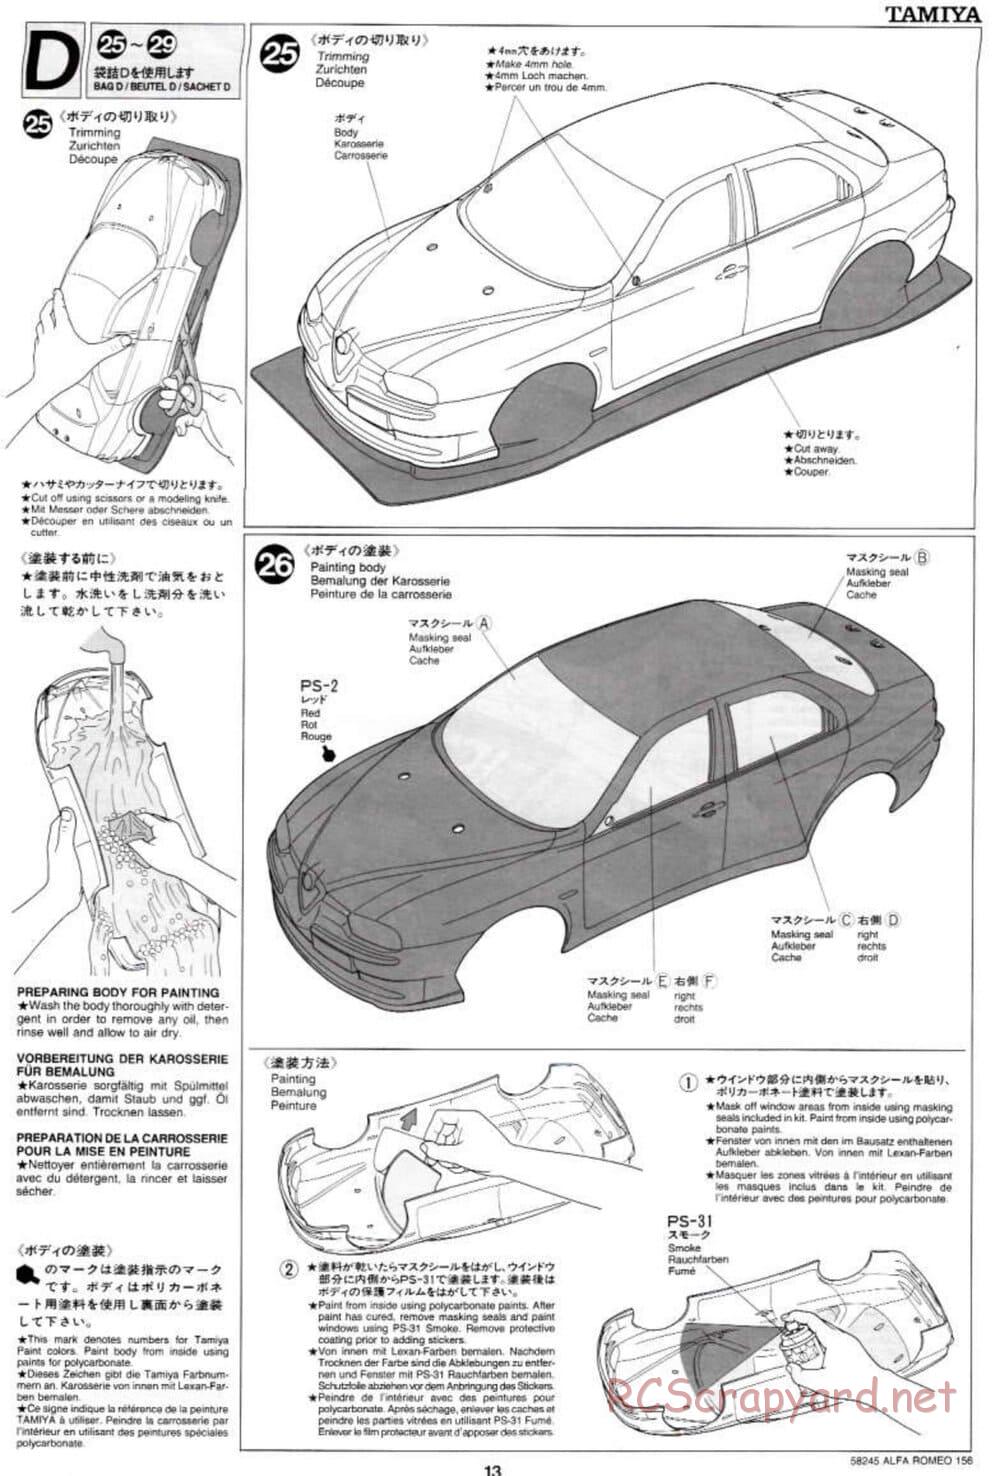 Tamiya - Alfa Romeo 156 Racing - FF-02 Chassis - Manual - Page 13